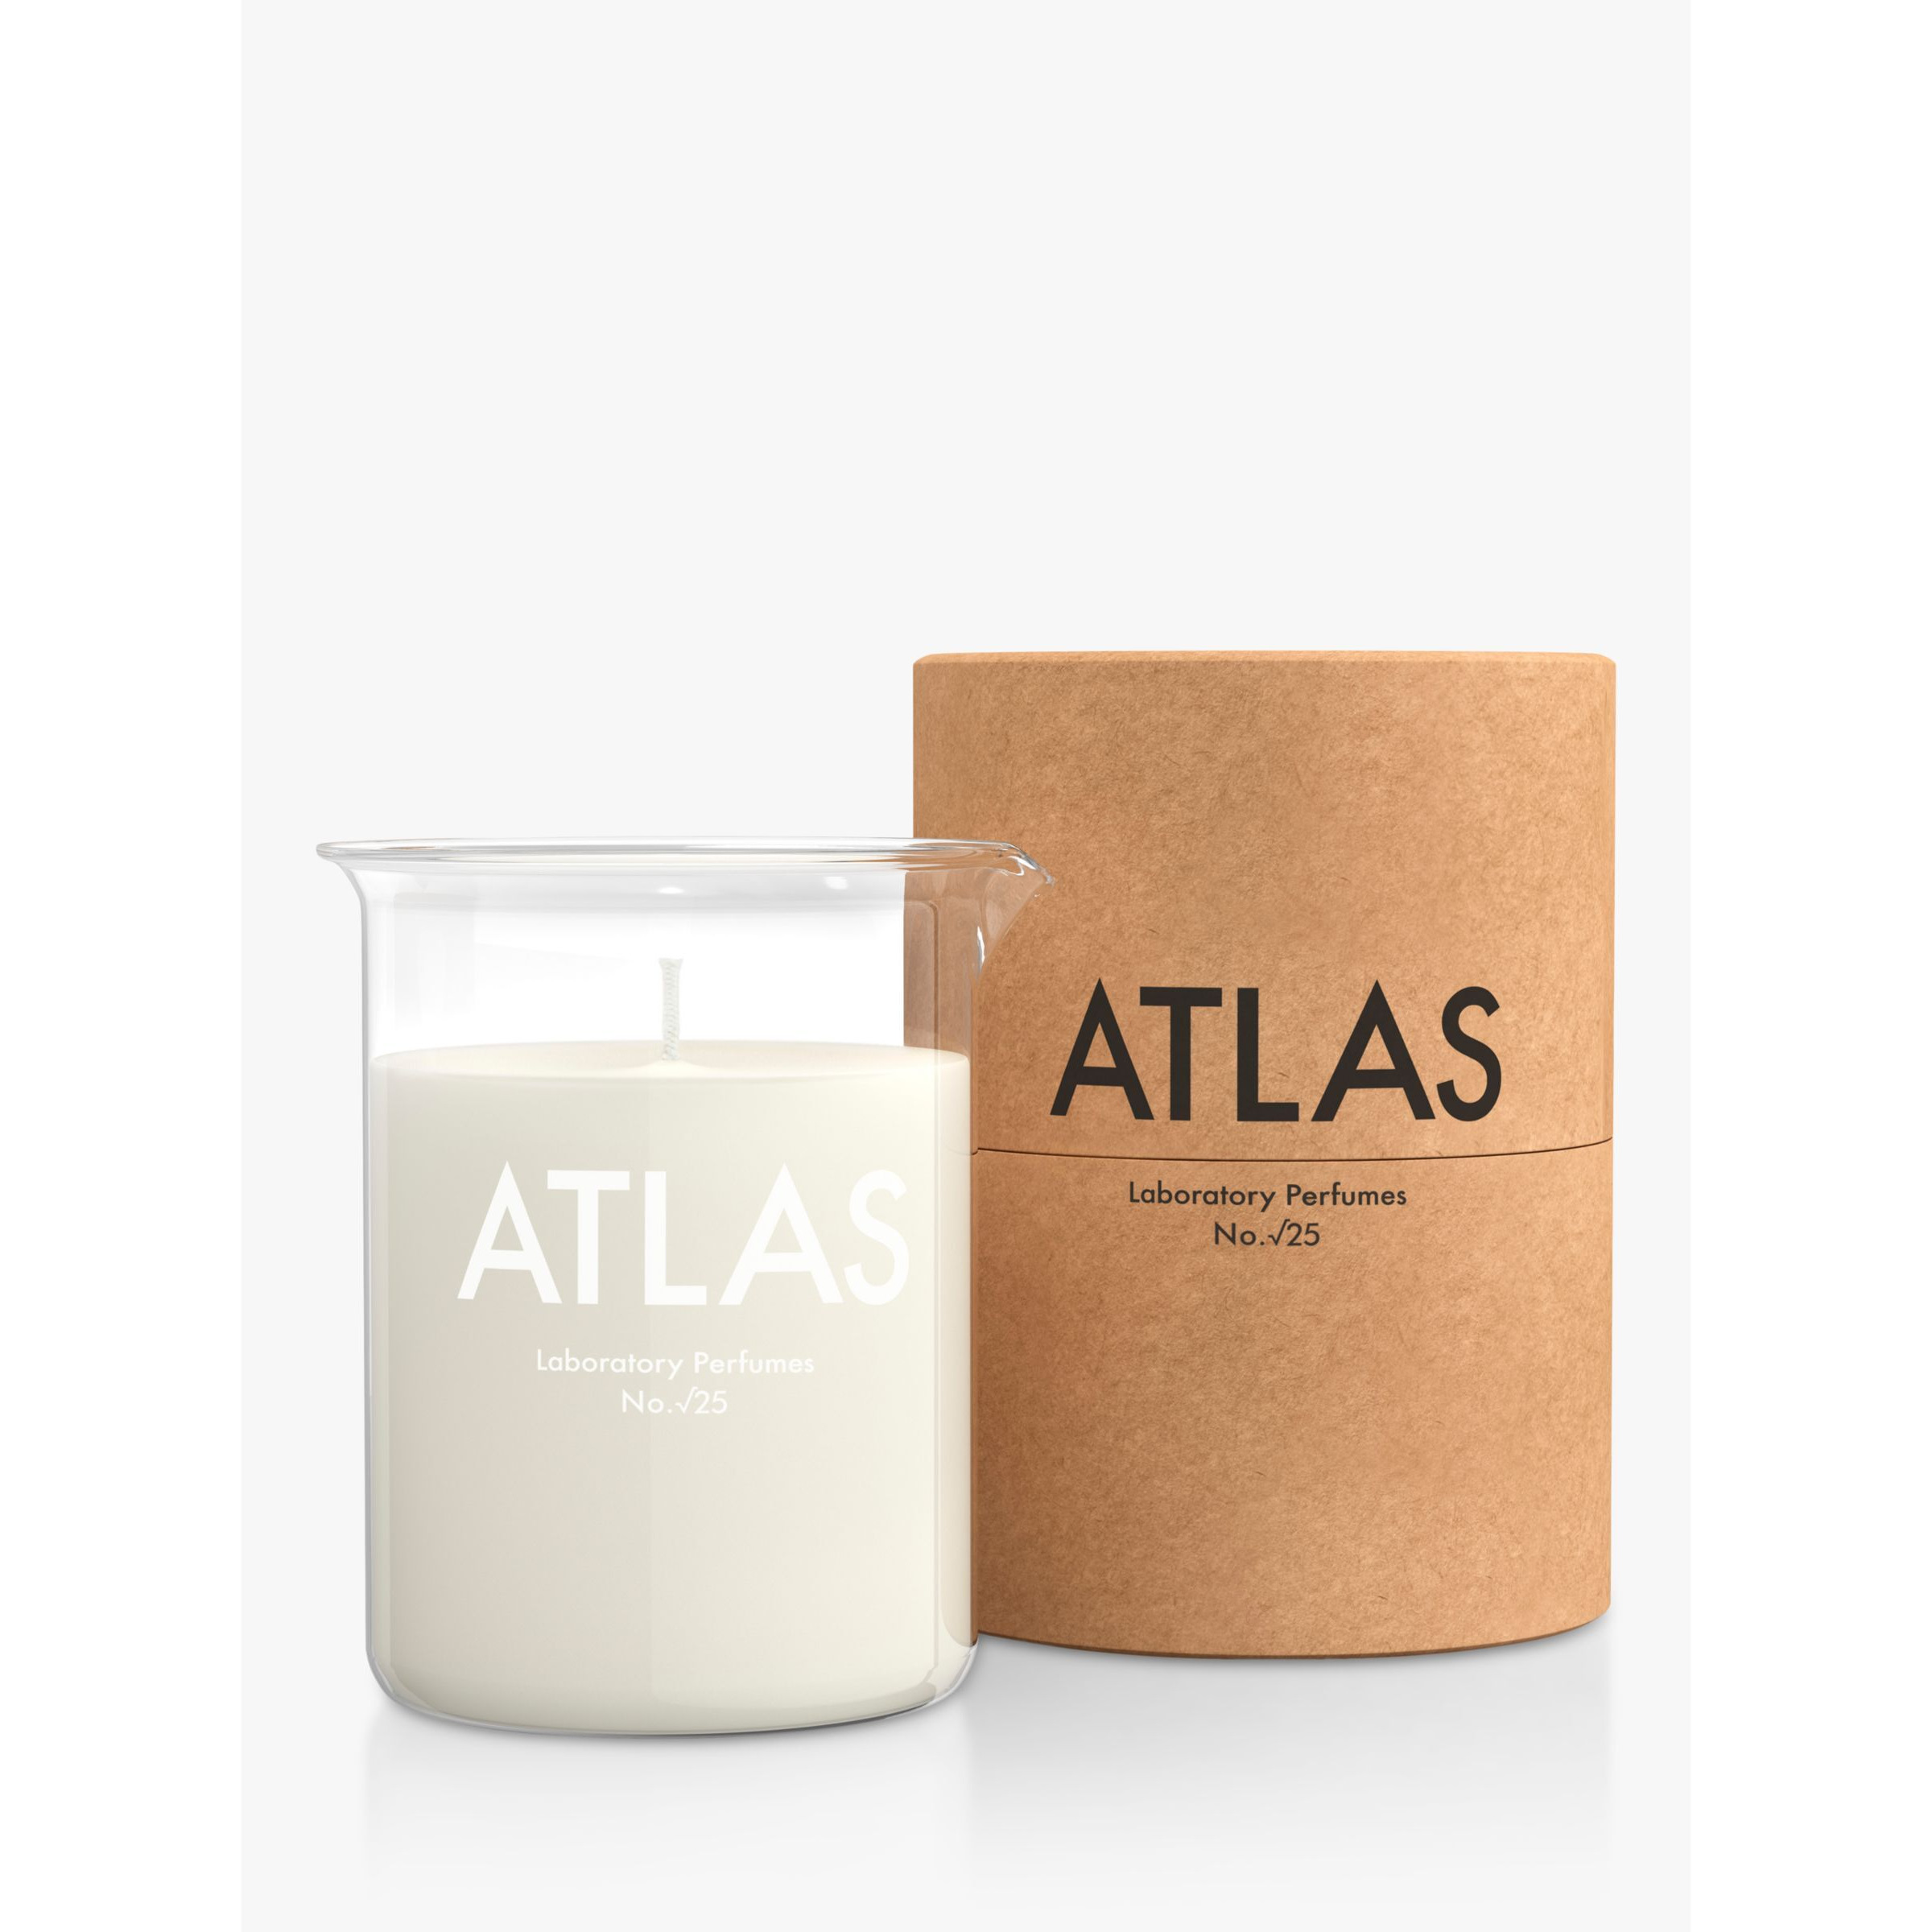 Laboratory Perfumes Atlas Candle, 200g - image 1